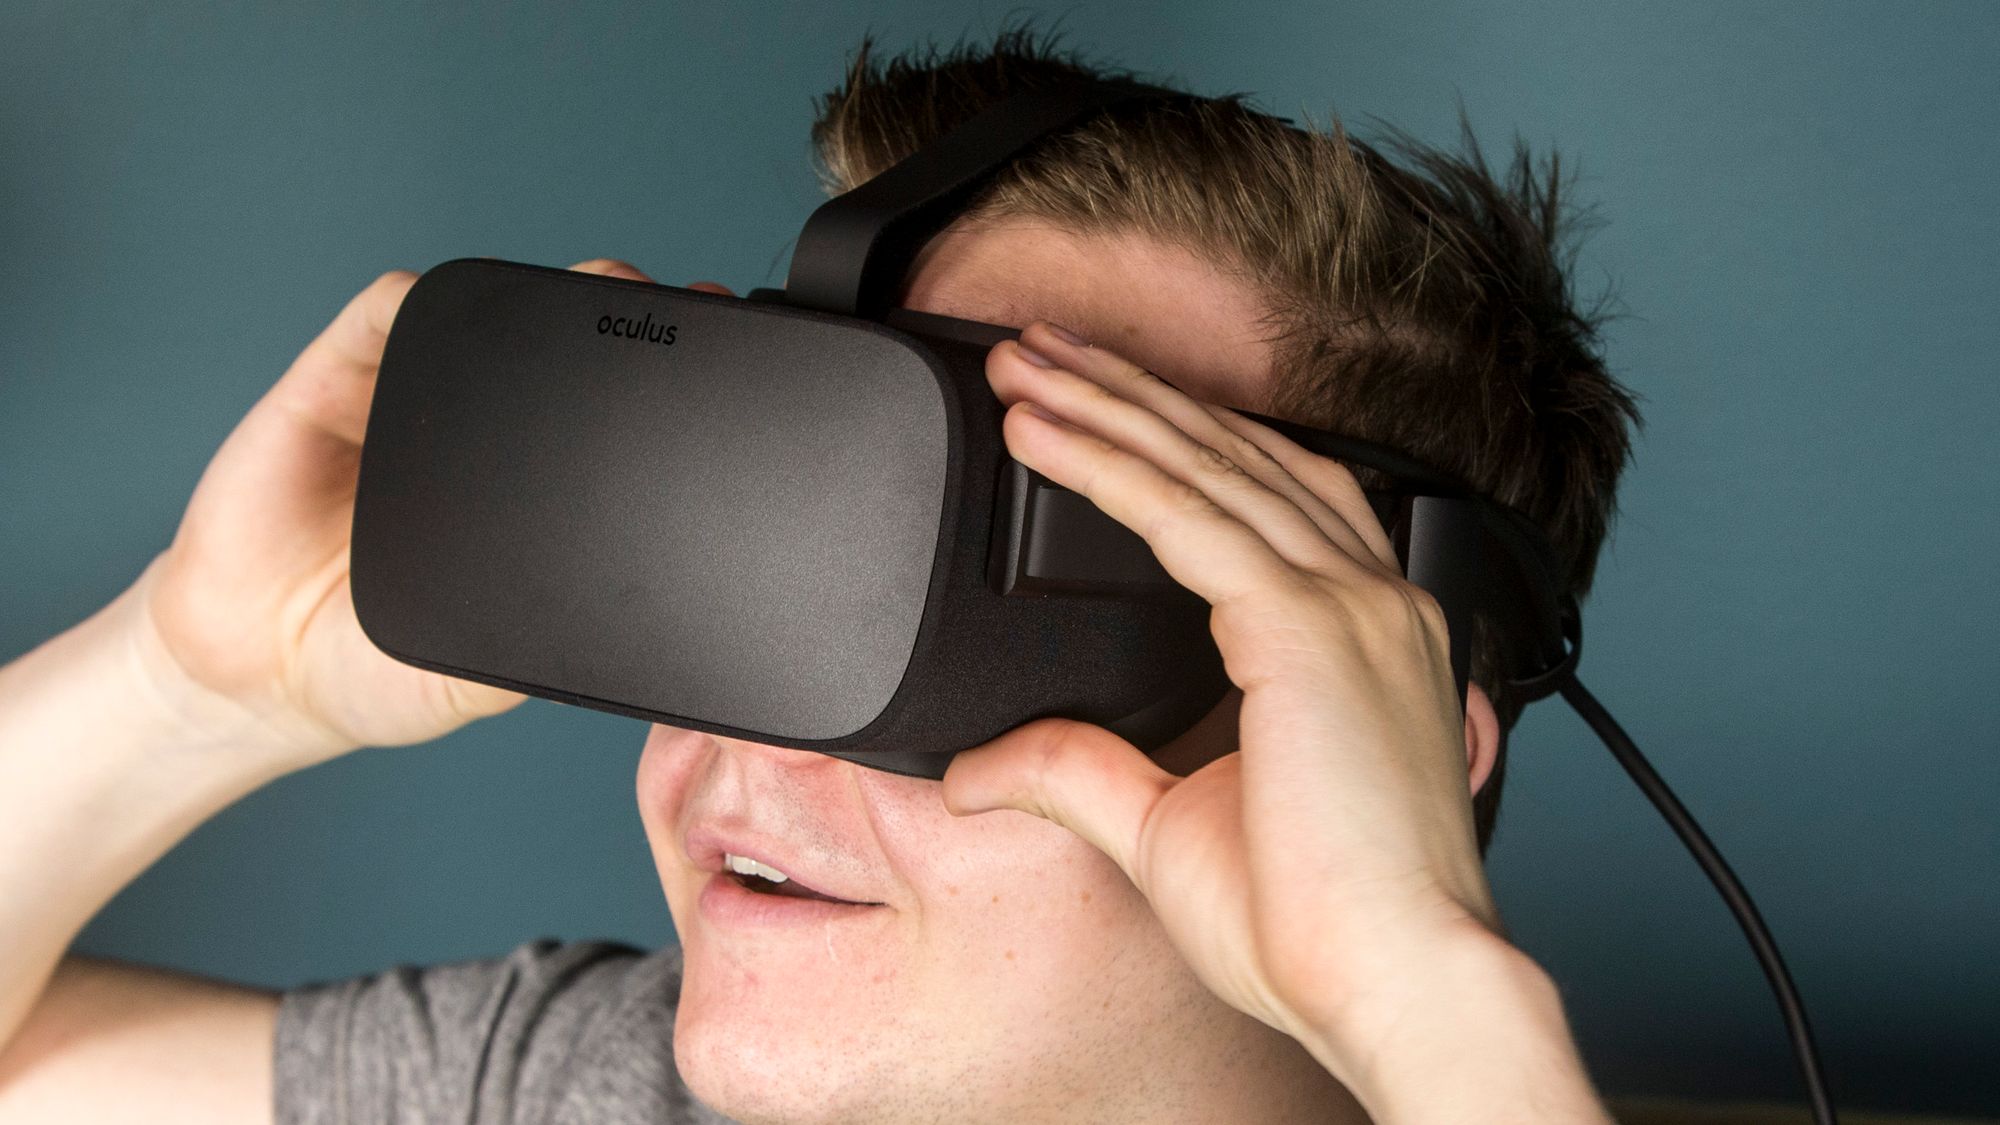 Når øynene dine bedrar deg: For tett på med virtual reality? - Digi.no